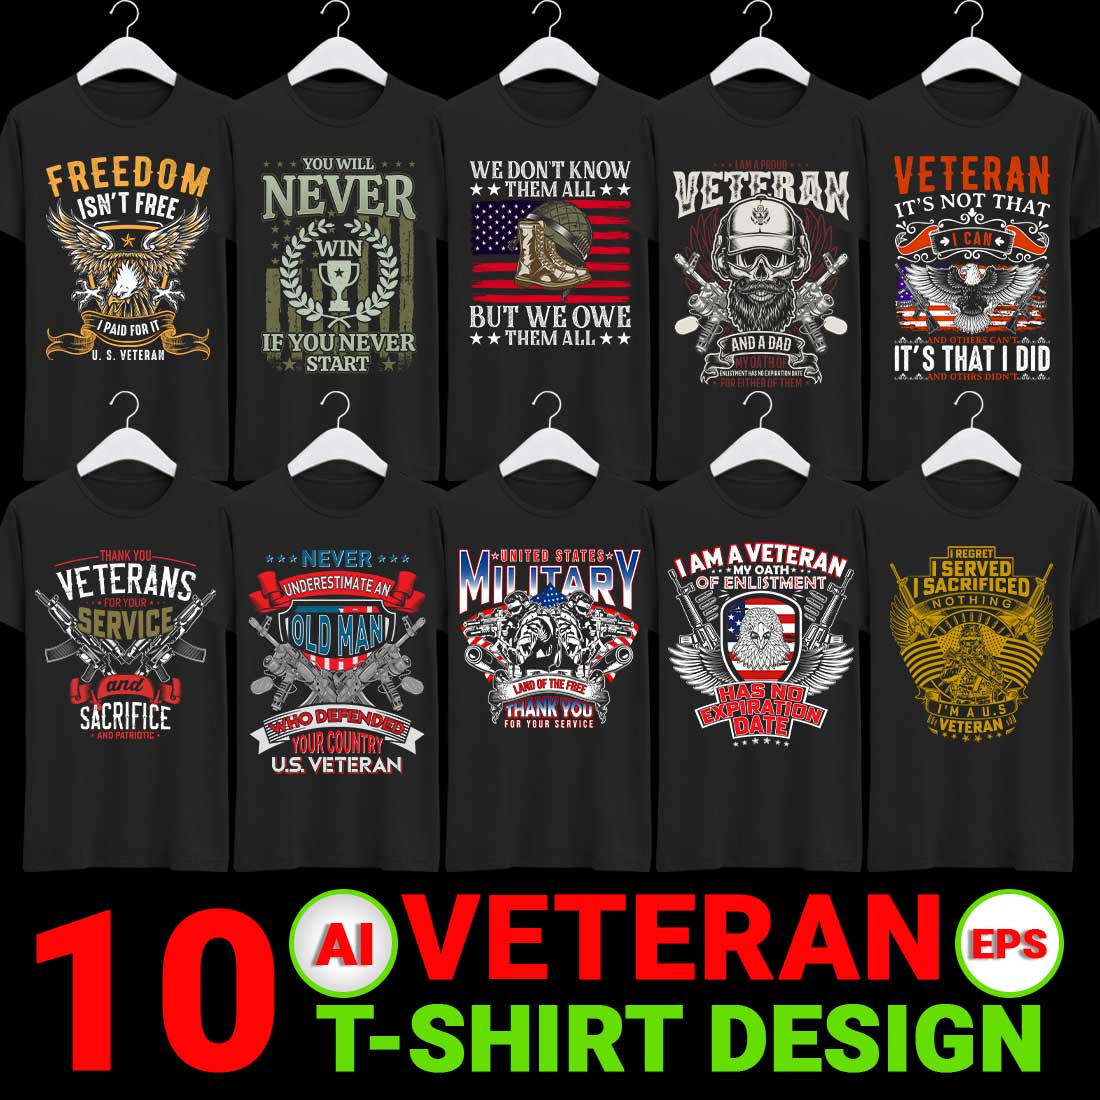 Veteran's Day T-Shirt Design cover image.